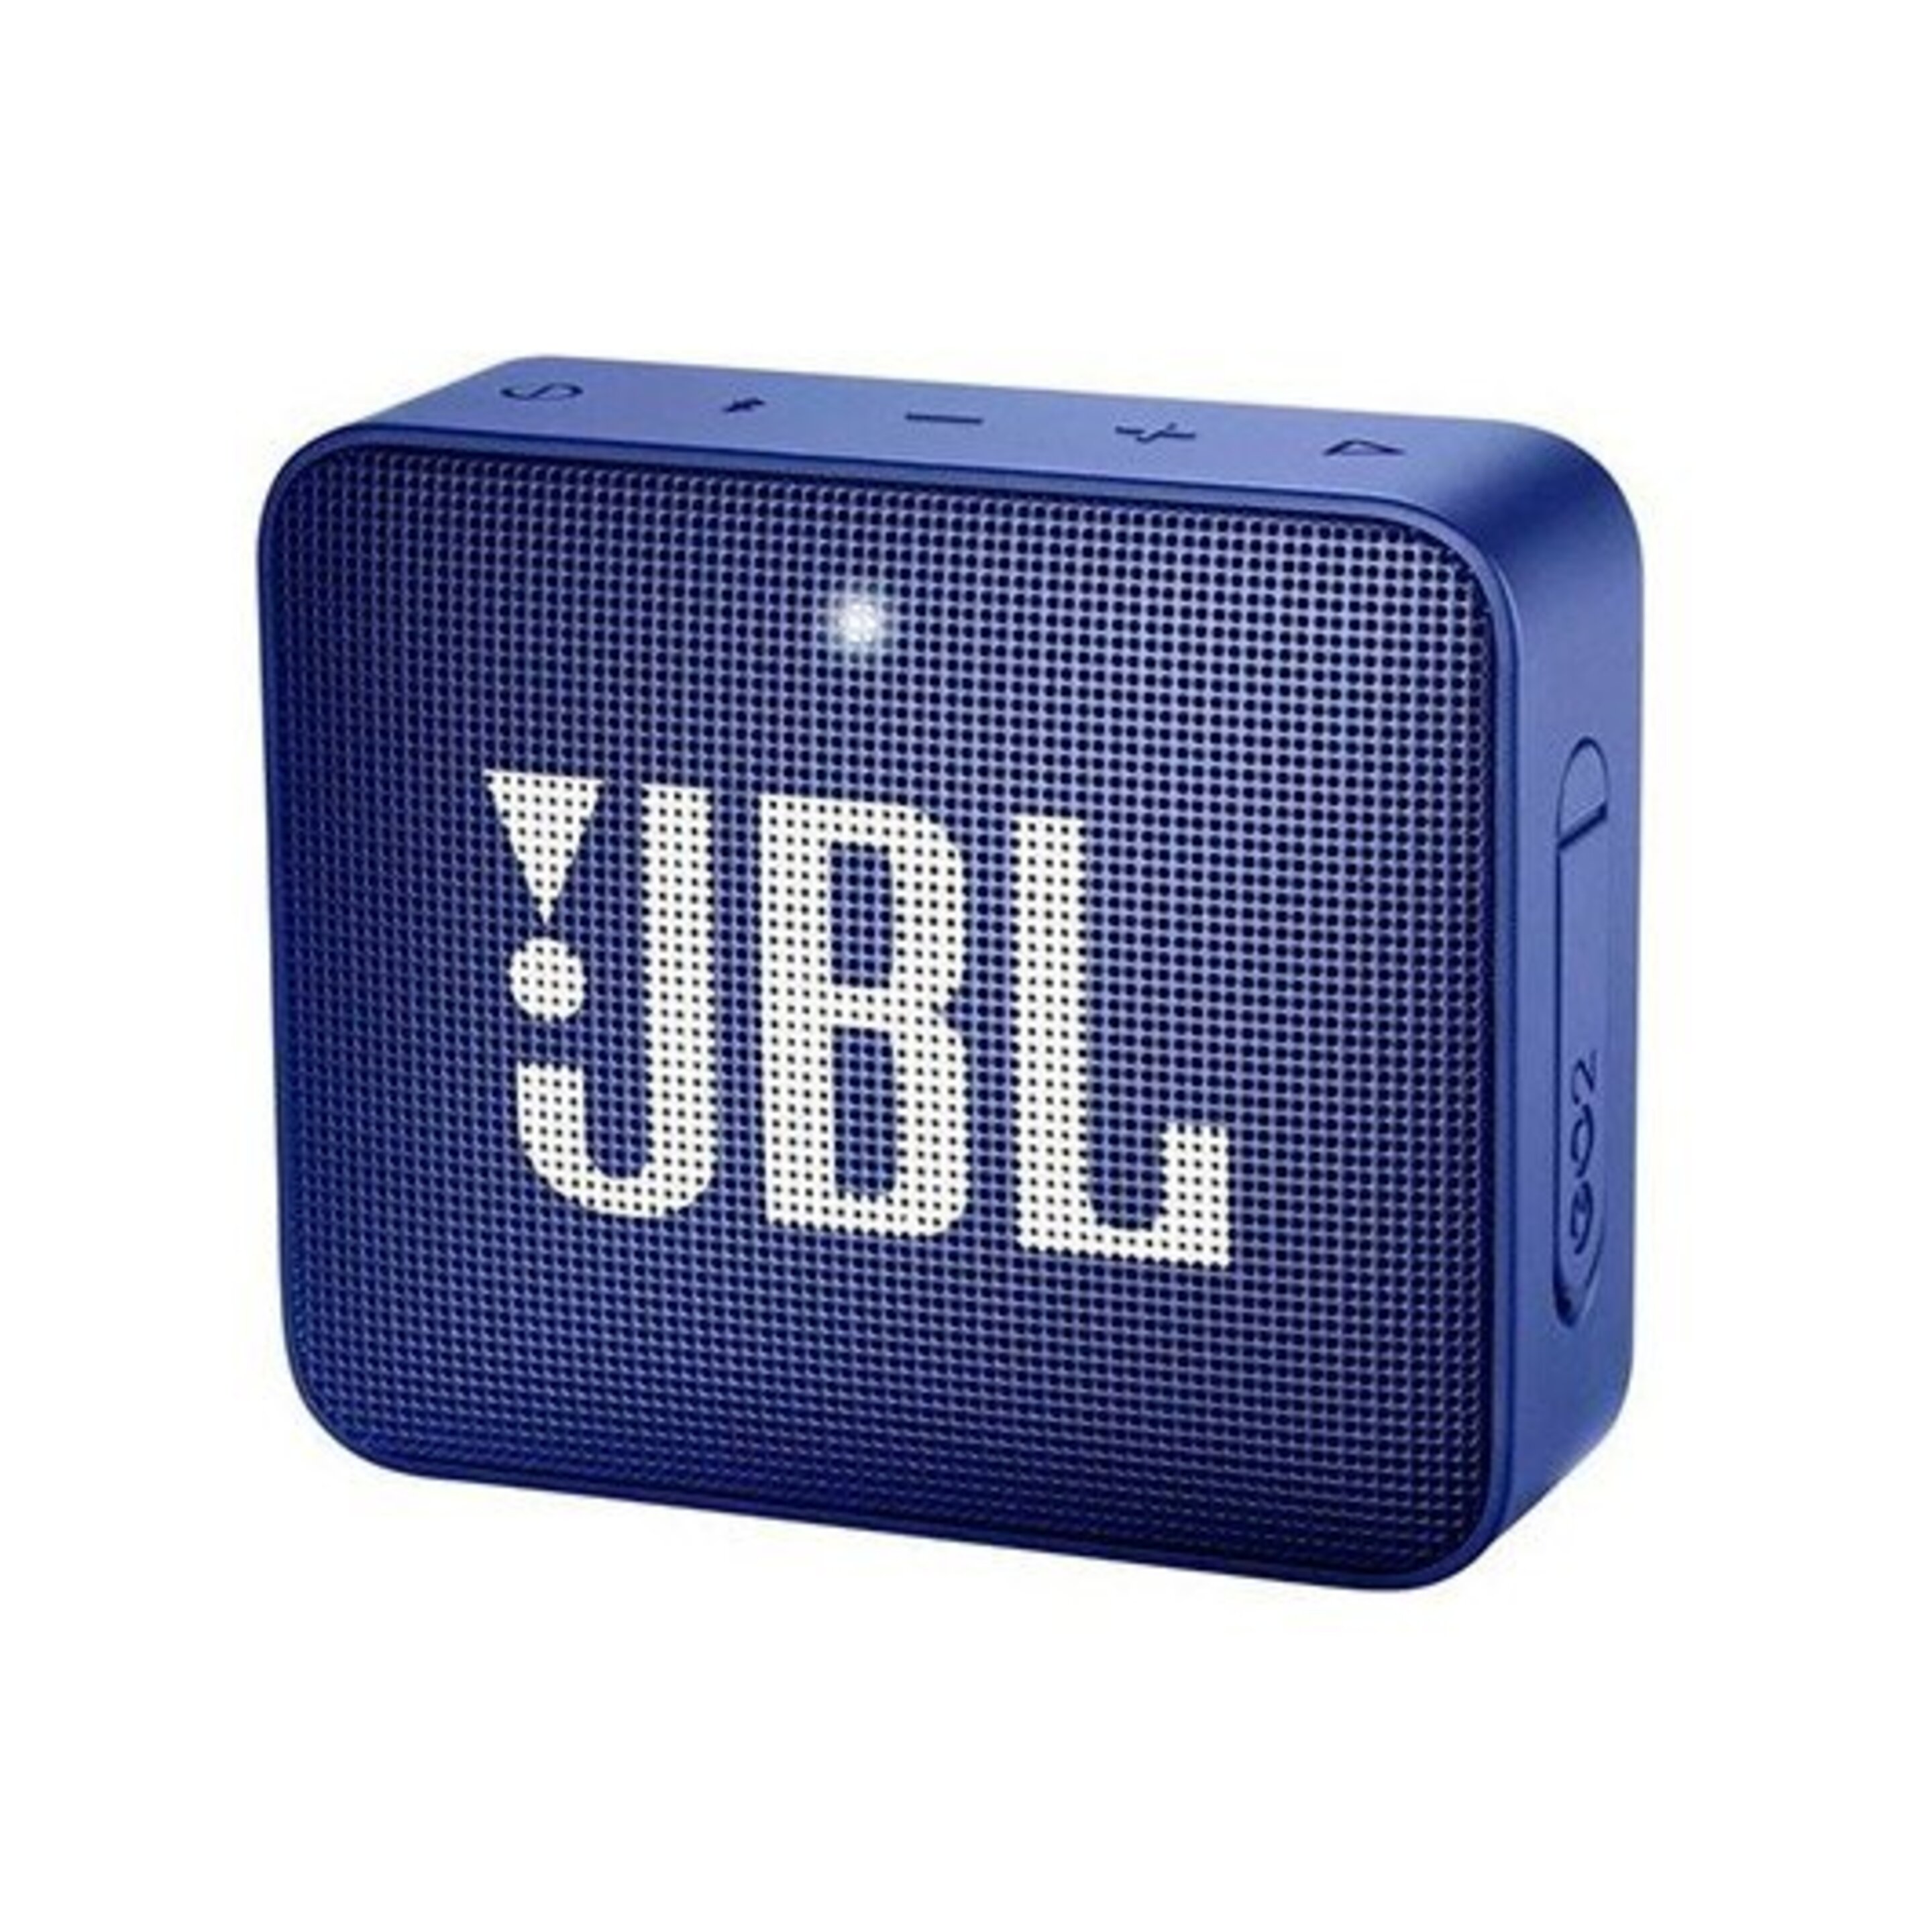 Altavoz Monofónico Portátil Jbl Go 2 3 W - Azul  MKP